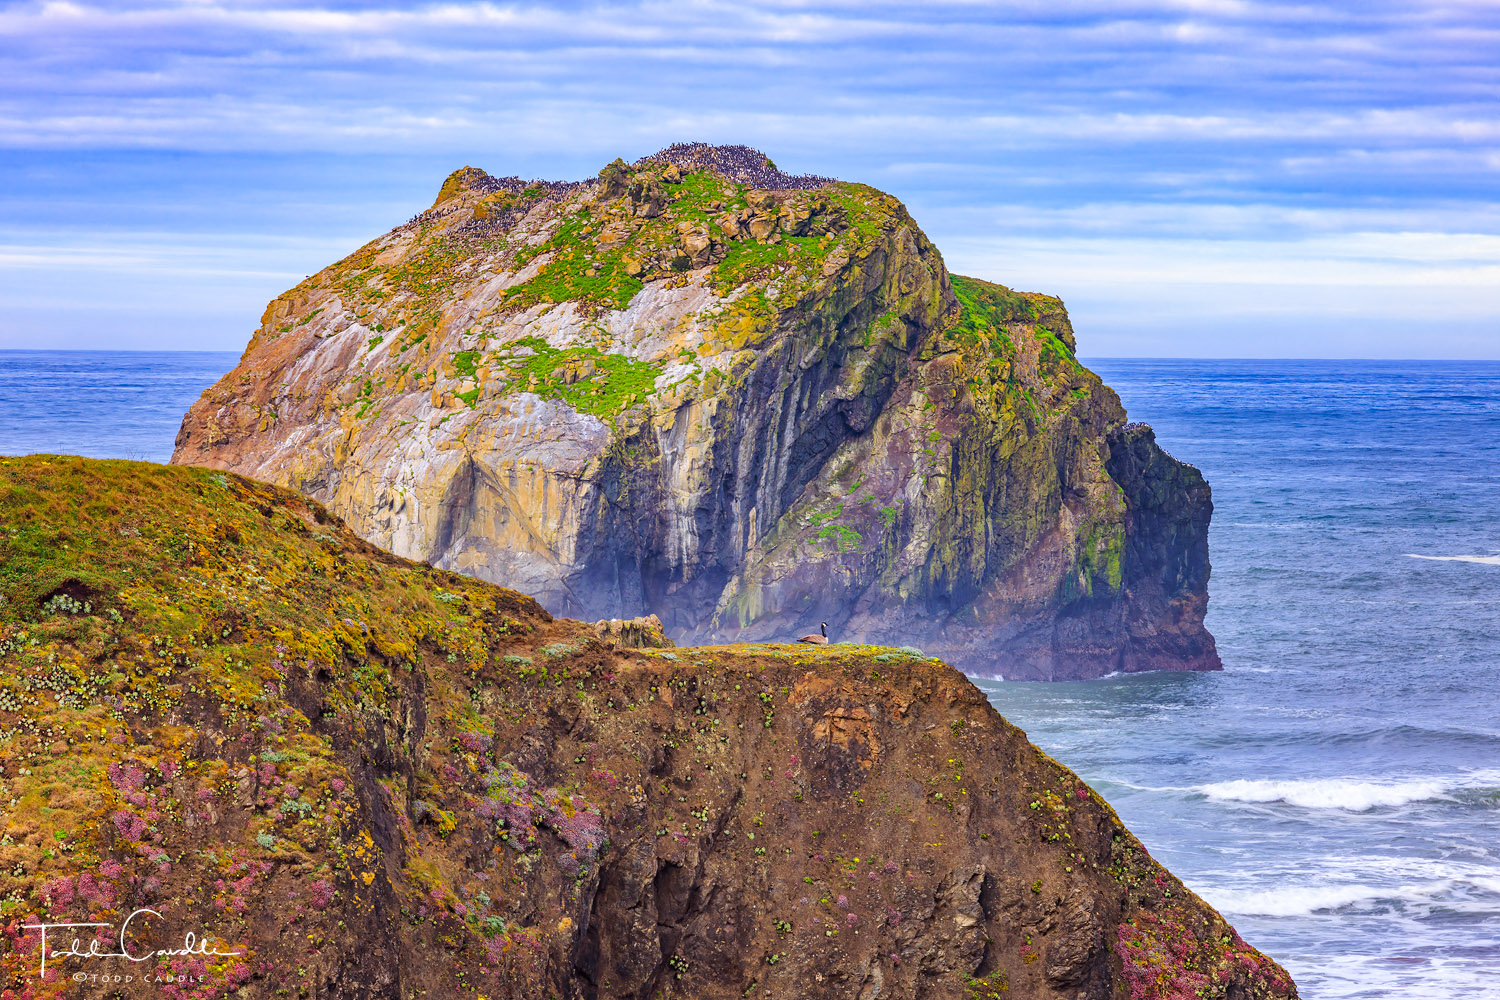 Hundreds of seabirds take up residence atop aptly named Face Rock off the coast near Bandon.